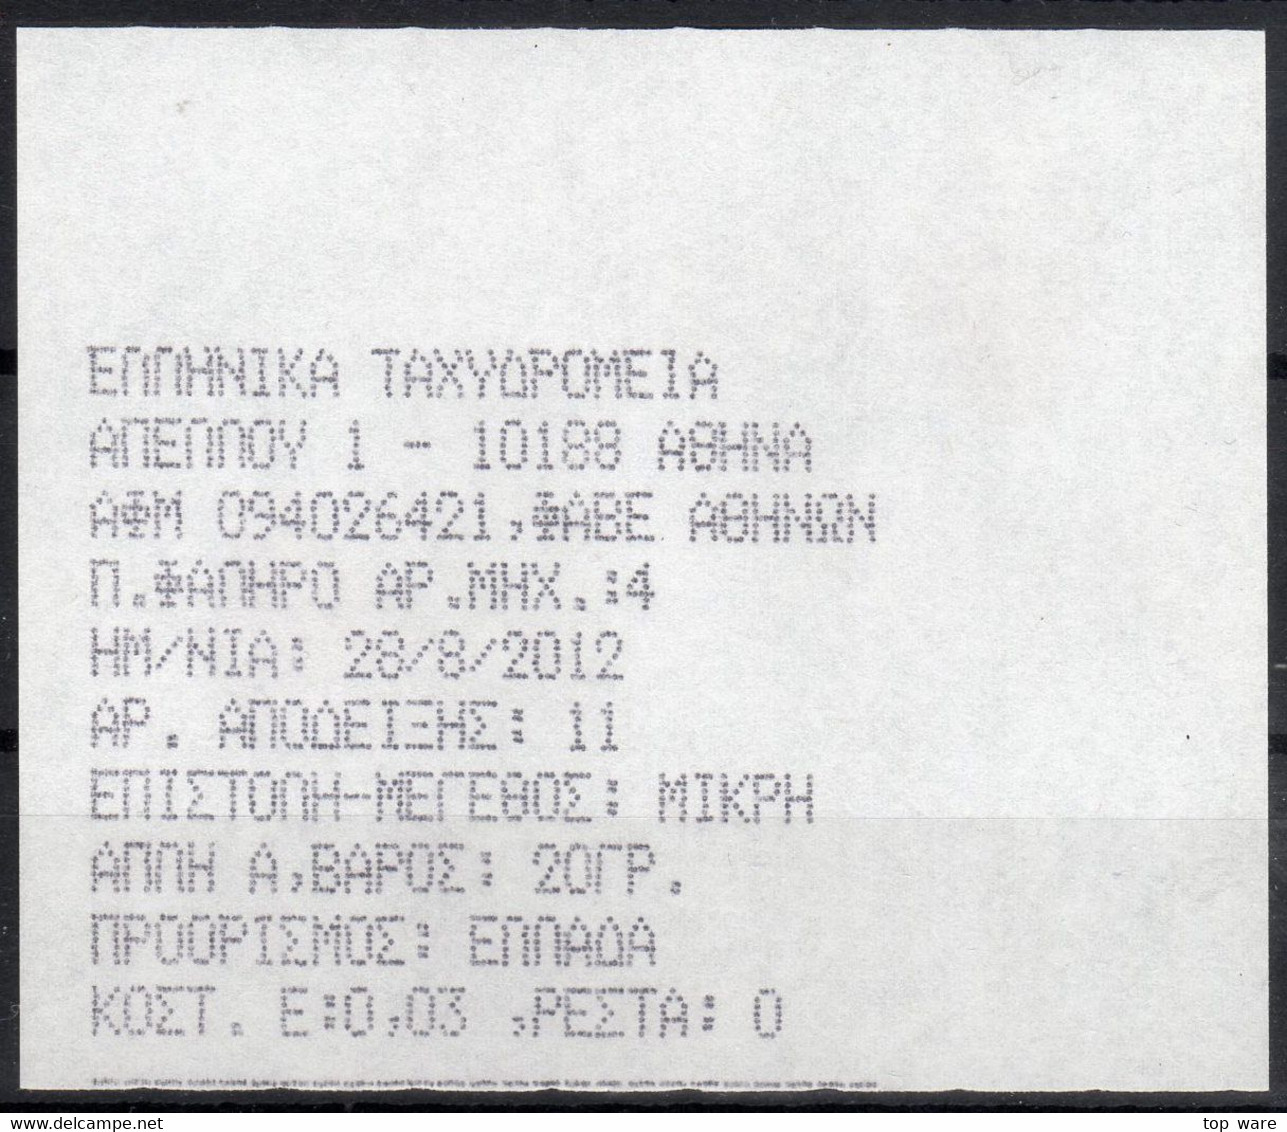 Greece Griechenland HELLAS ATM 23 Temple Colums * Red * Euro 0,03 MNH + Receipt * Frama Etiquetas Automatenmarken - Machine Labels [ATM]